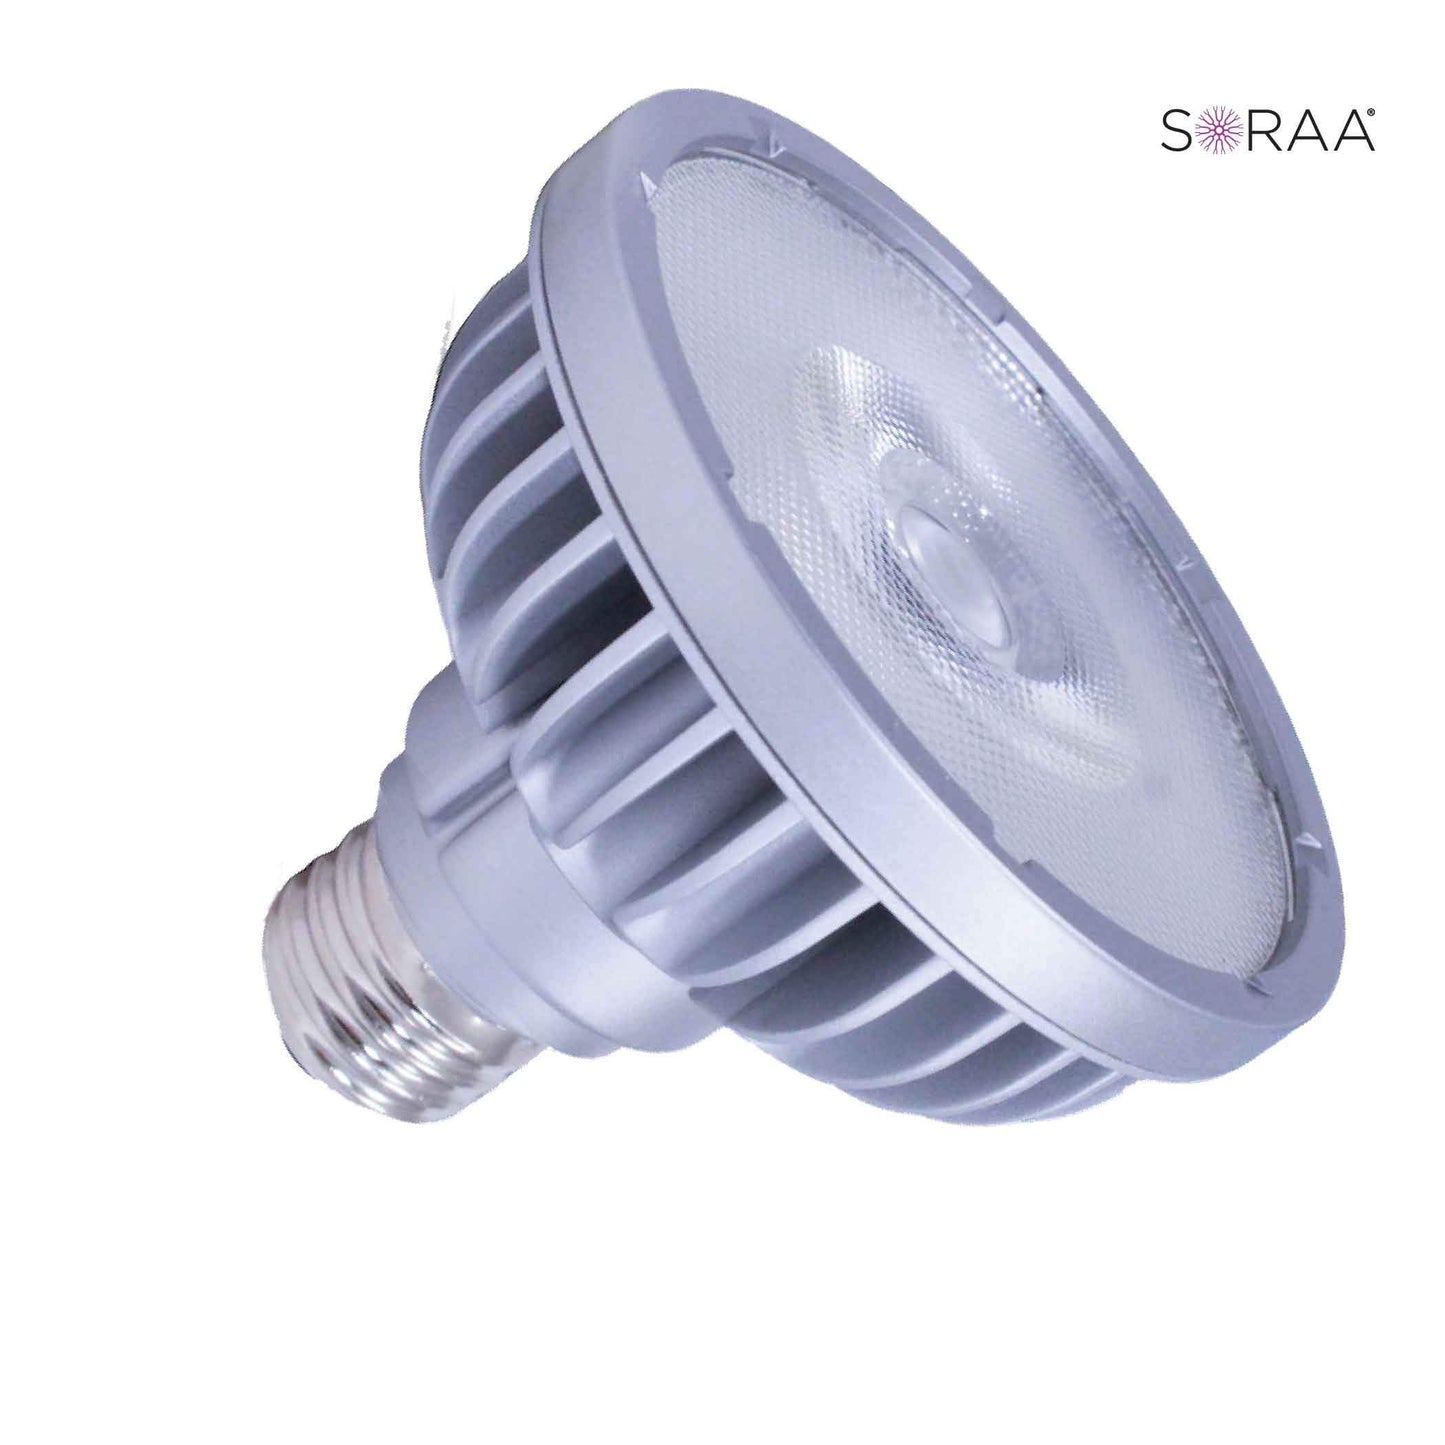 SORAA LED PAR30SN MEDIUM SCREW (E26) 18.5W DIMMABLE LIGHT BULB 2700K/WARM WHITE 120W HALOGEN EQUIVALENT 1PK (777751)